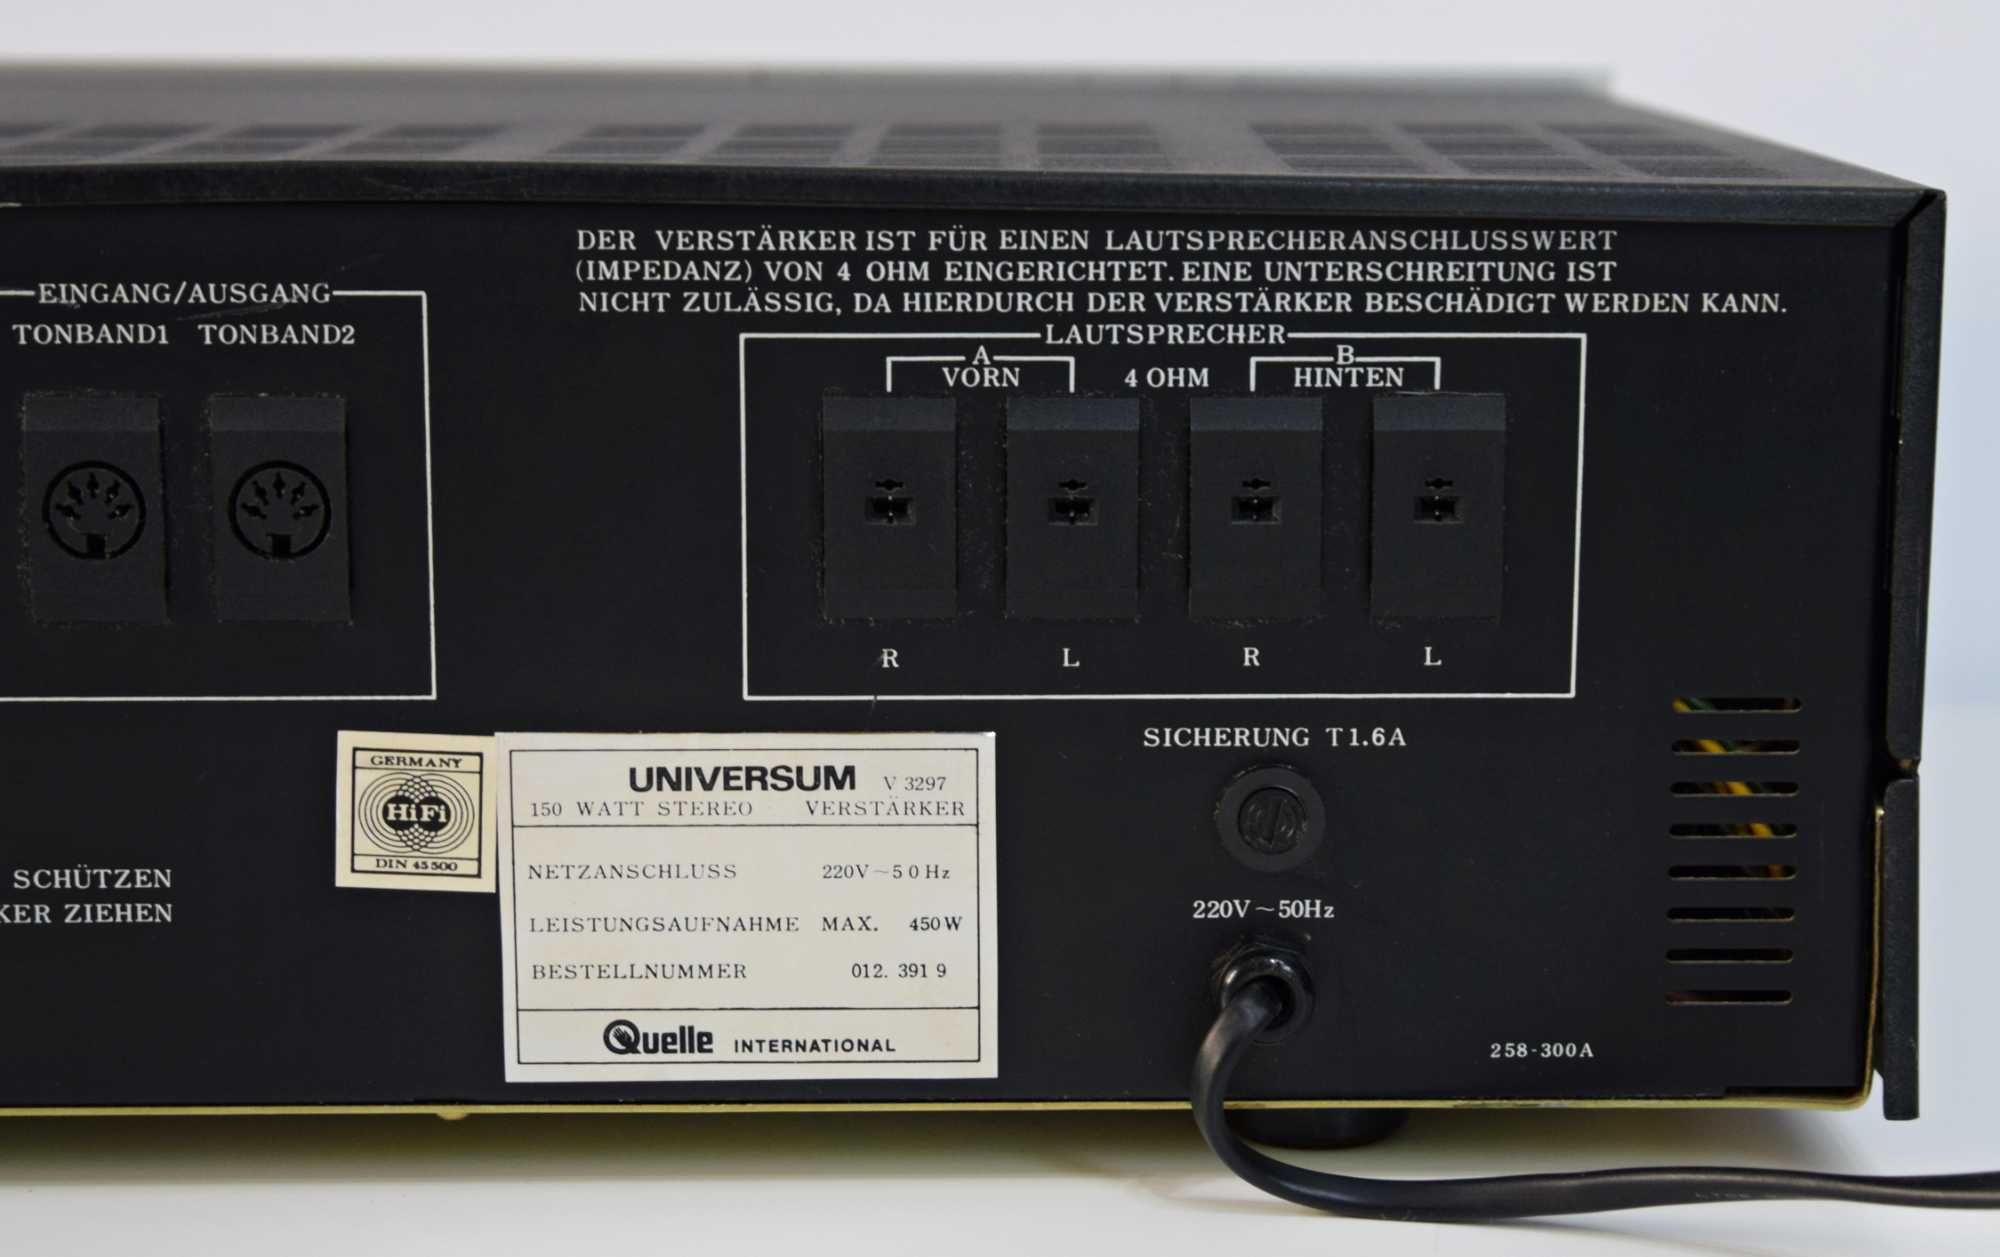 Amplificator Universum V 3297, Dynamics System HiFi 2500